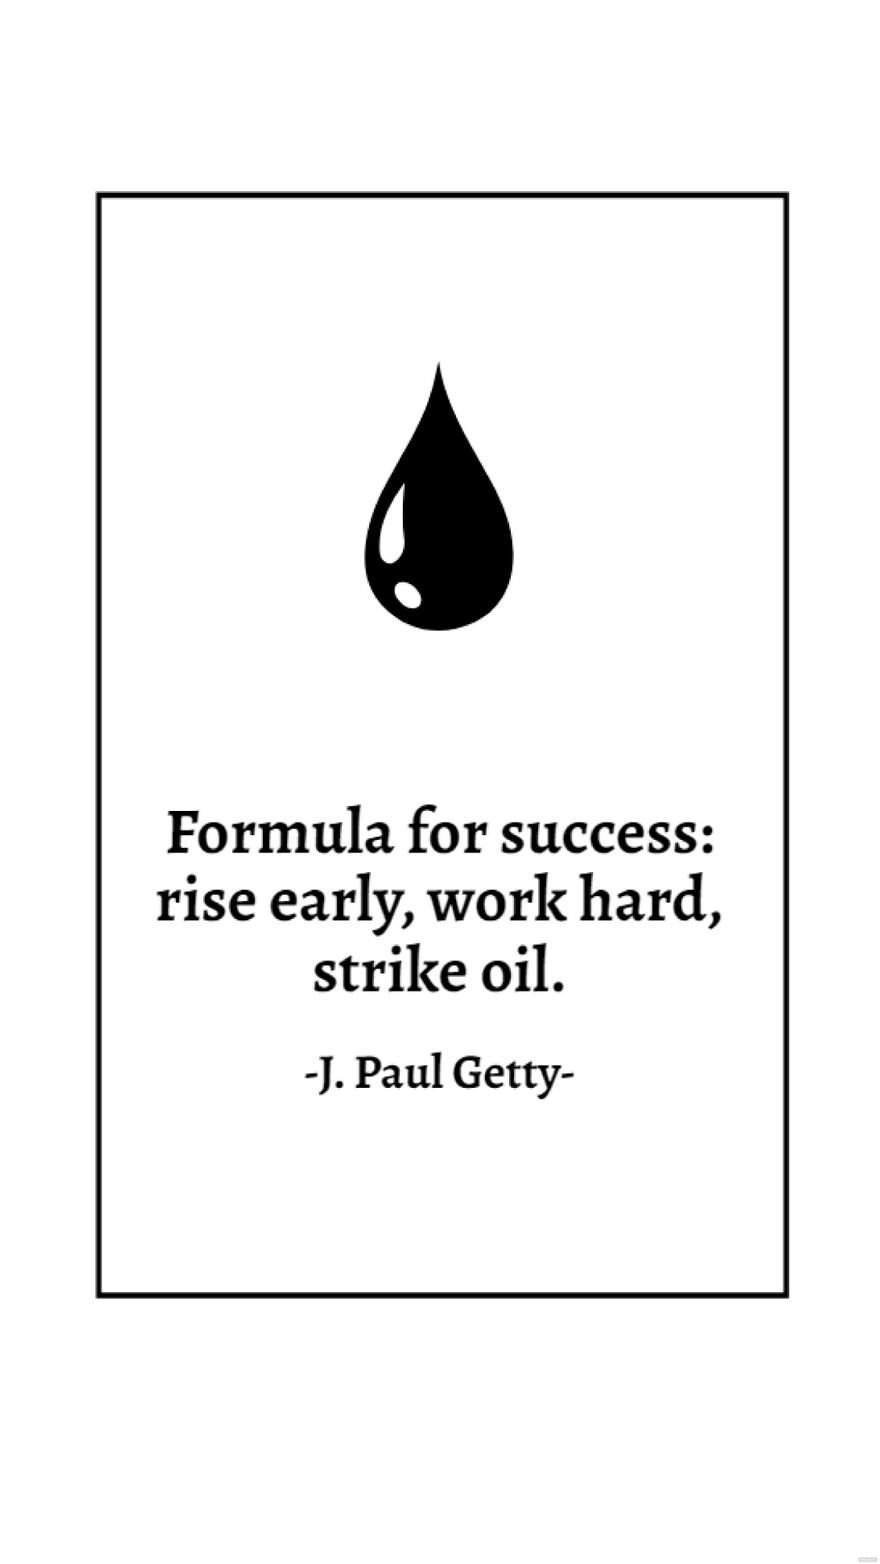 Free J. Paul Getty - Formula for success: rise early, work hard, strike oil. in JPG